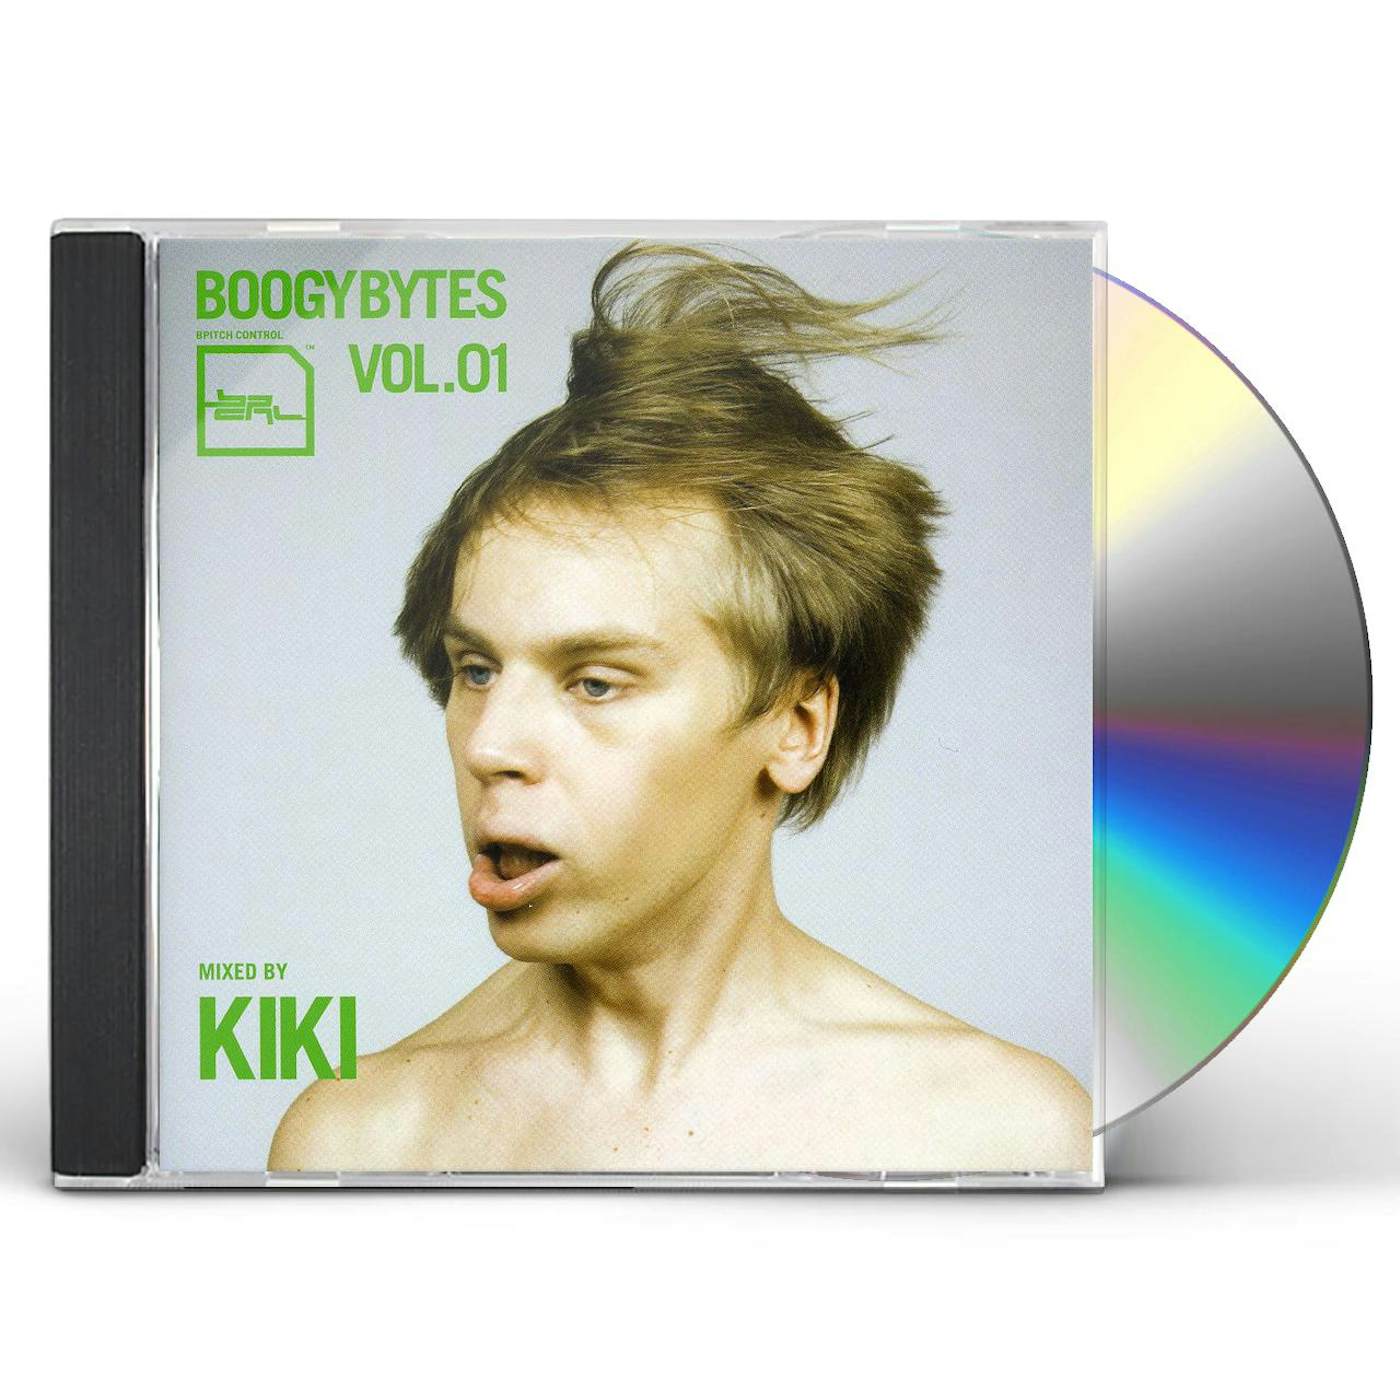 KIKI BOOGY BYTES 1 CD